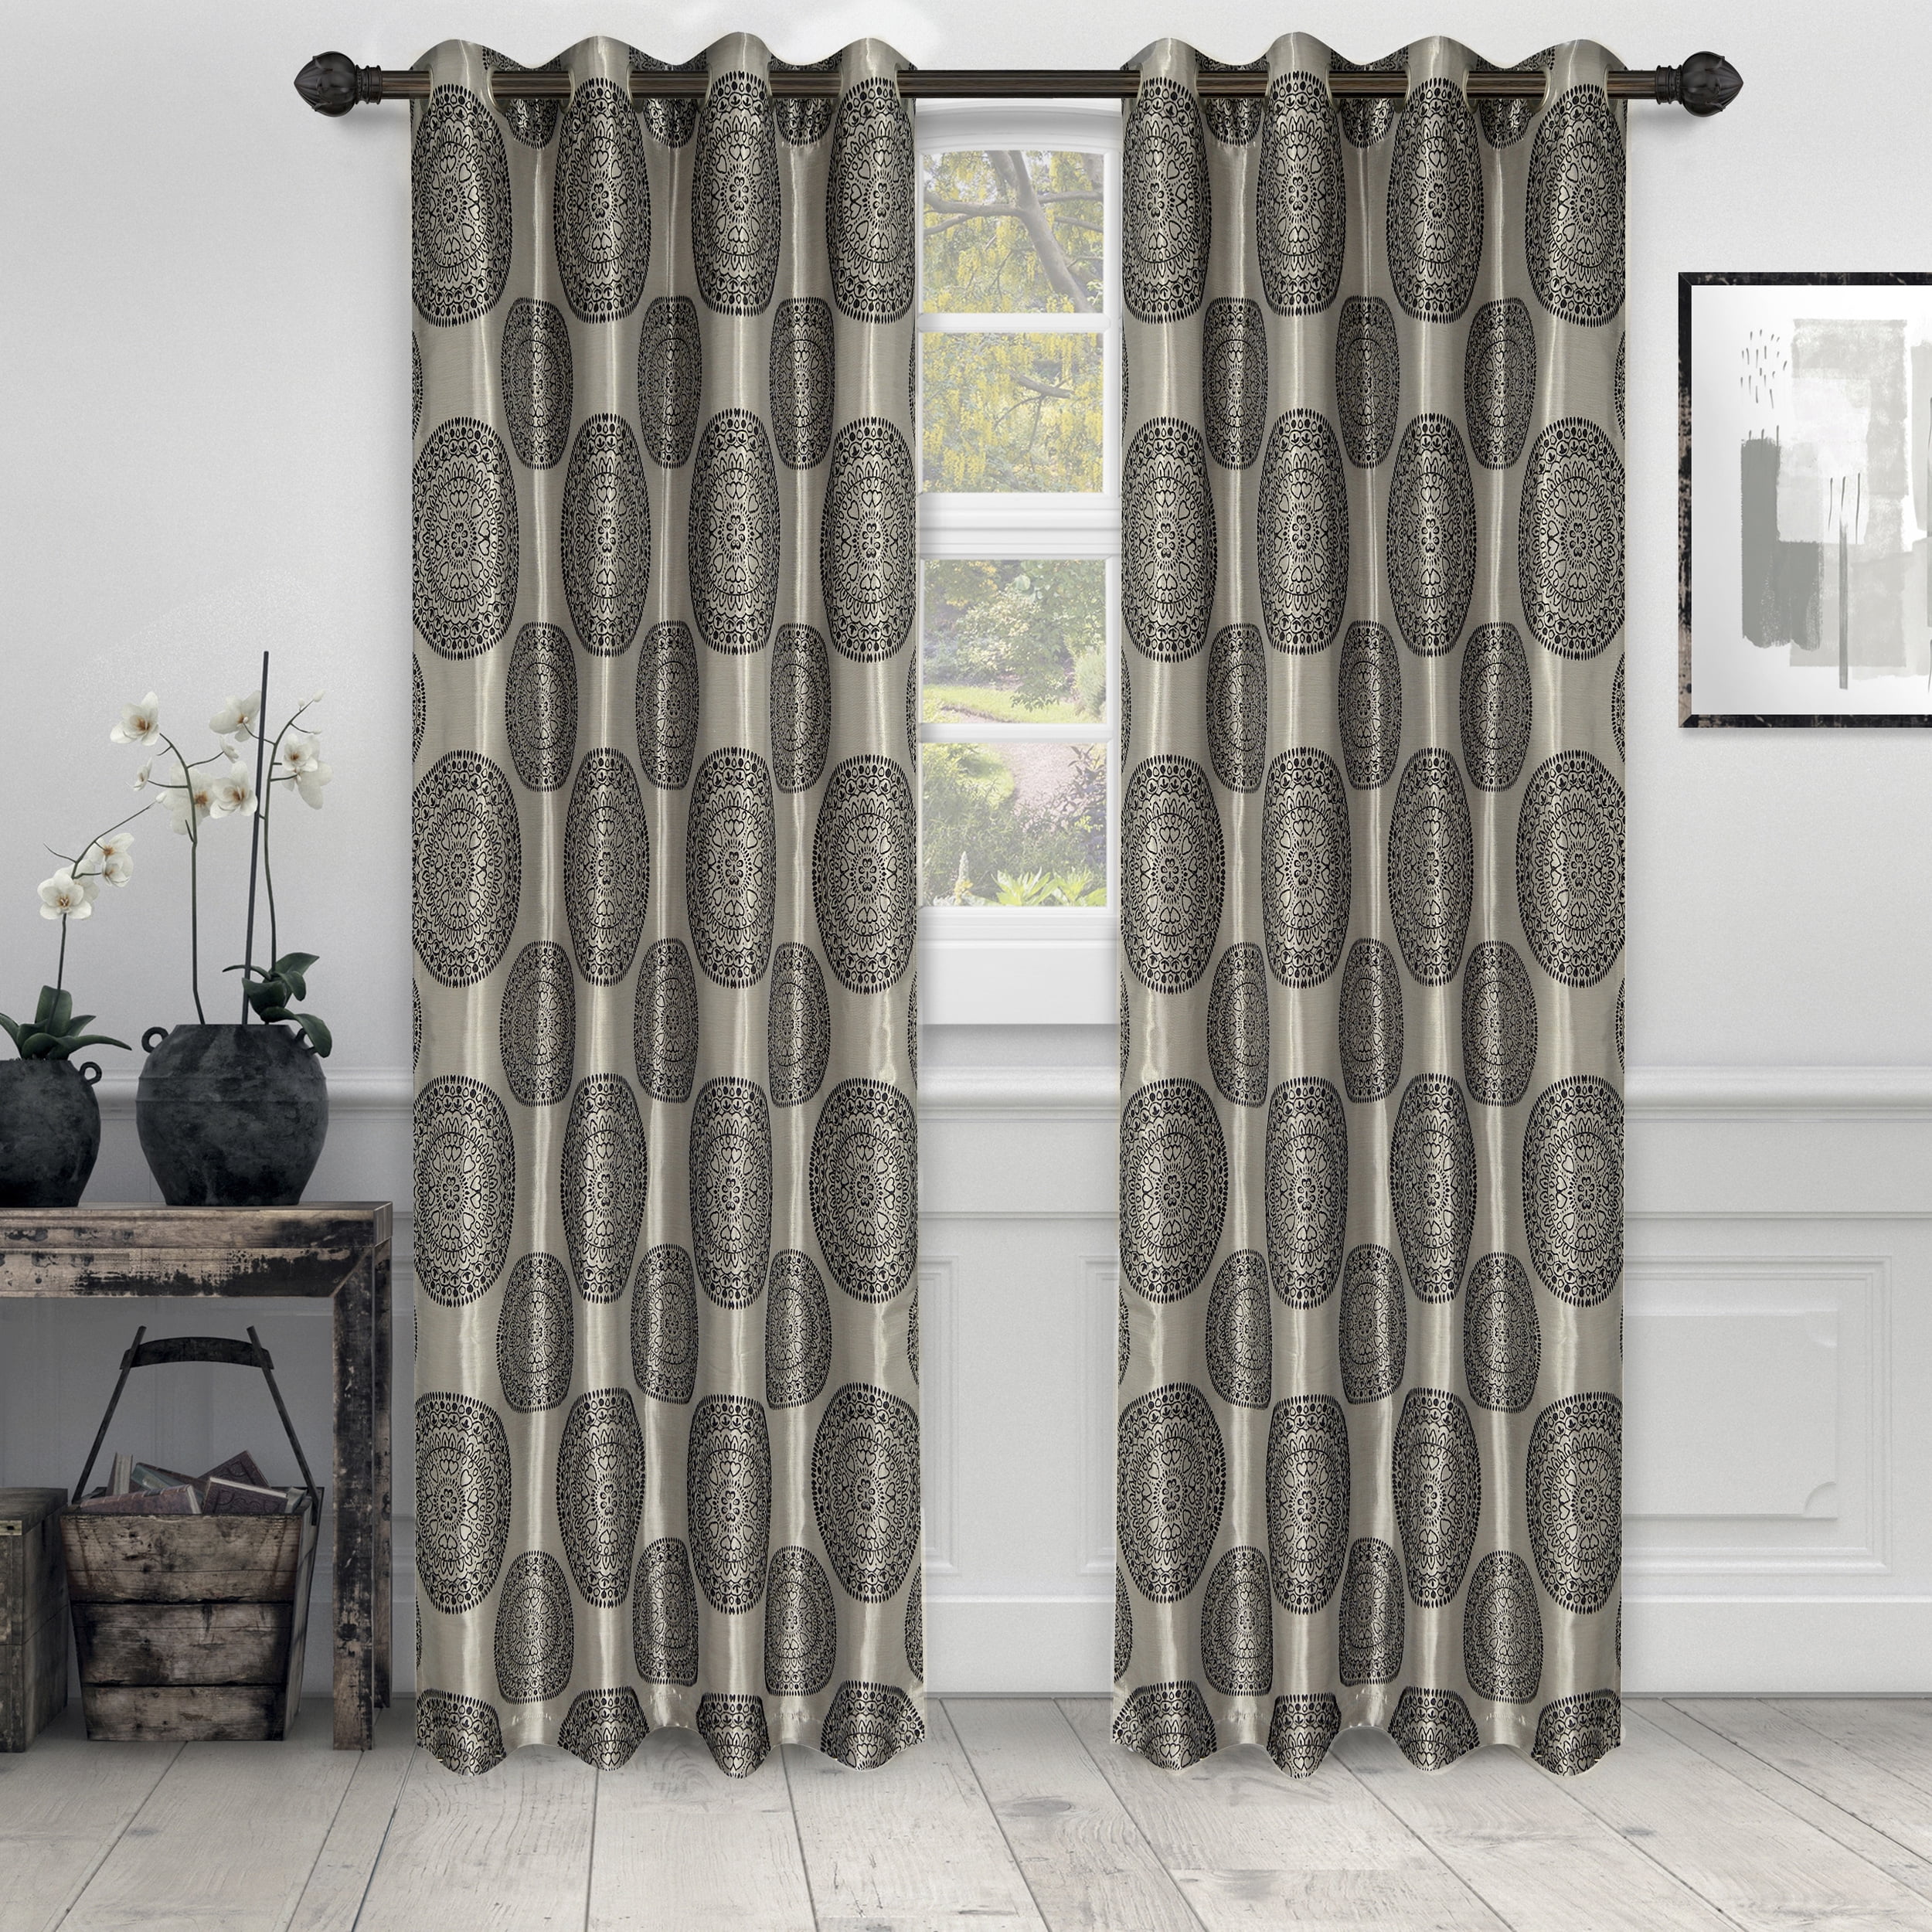 Aryanna Top Grommet Jacquard Window Curtain Panel 100% Polyester Set of 2 Panels 